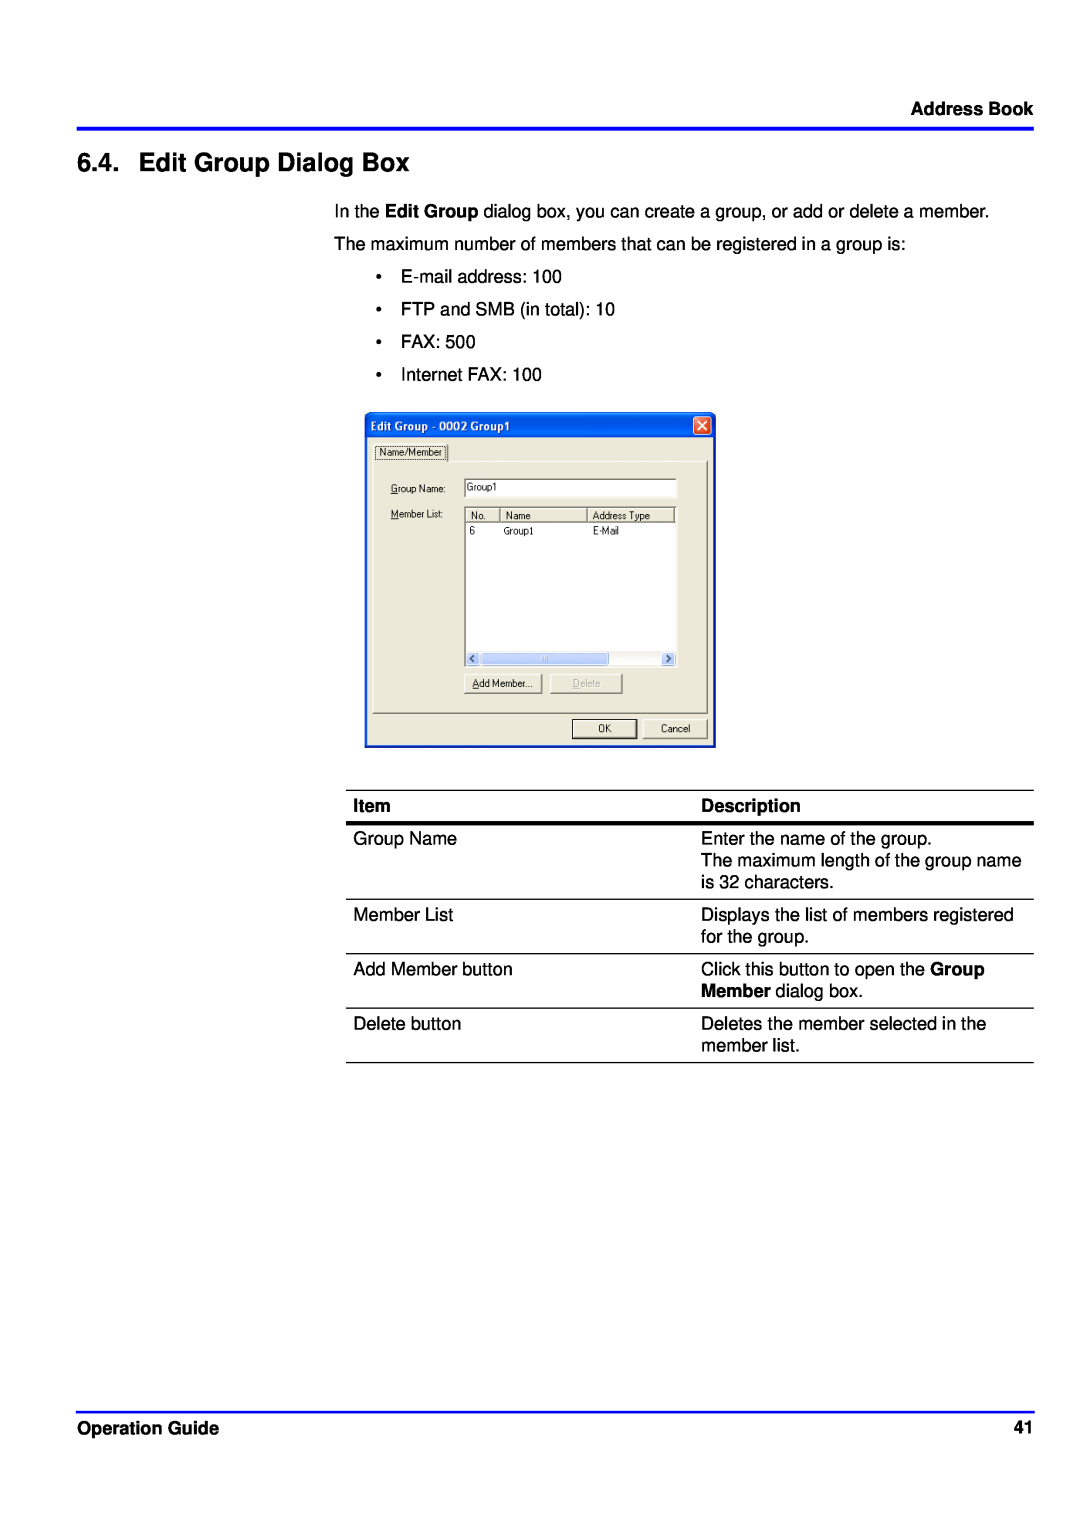 Kyocera KM-NET manual Edit Group Dialog Box, Address Book, Item, Description, Operation Guide 